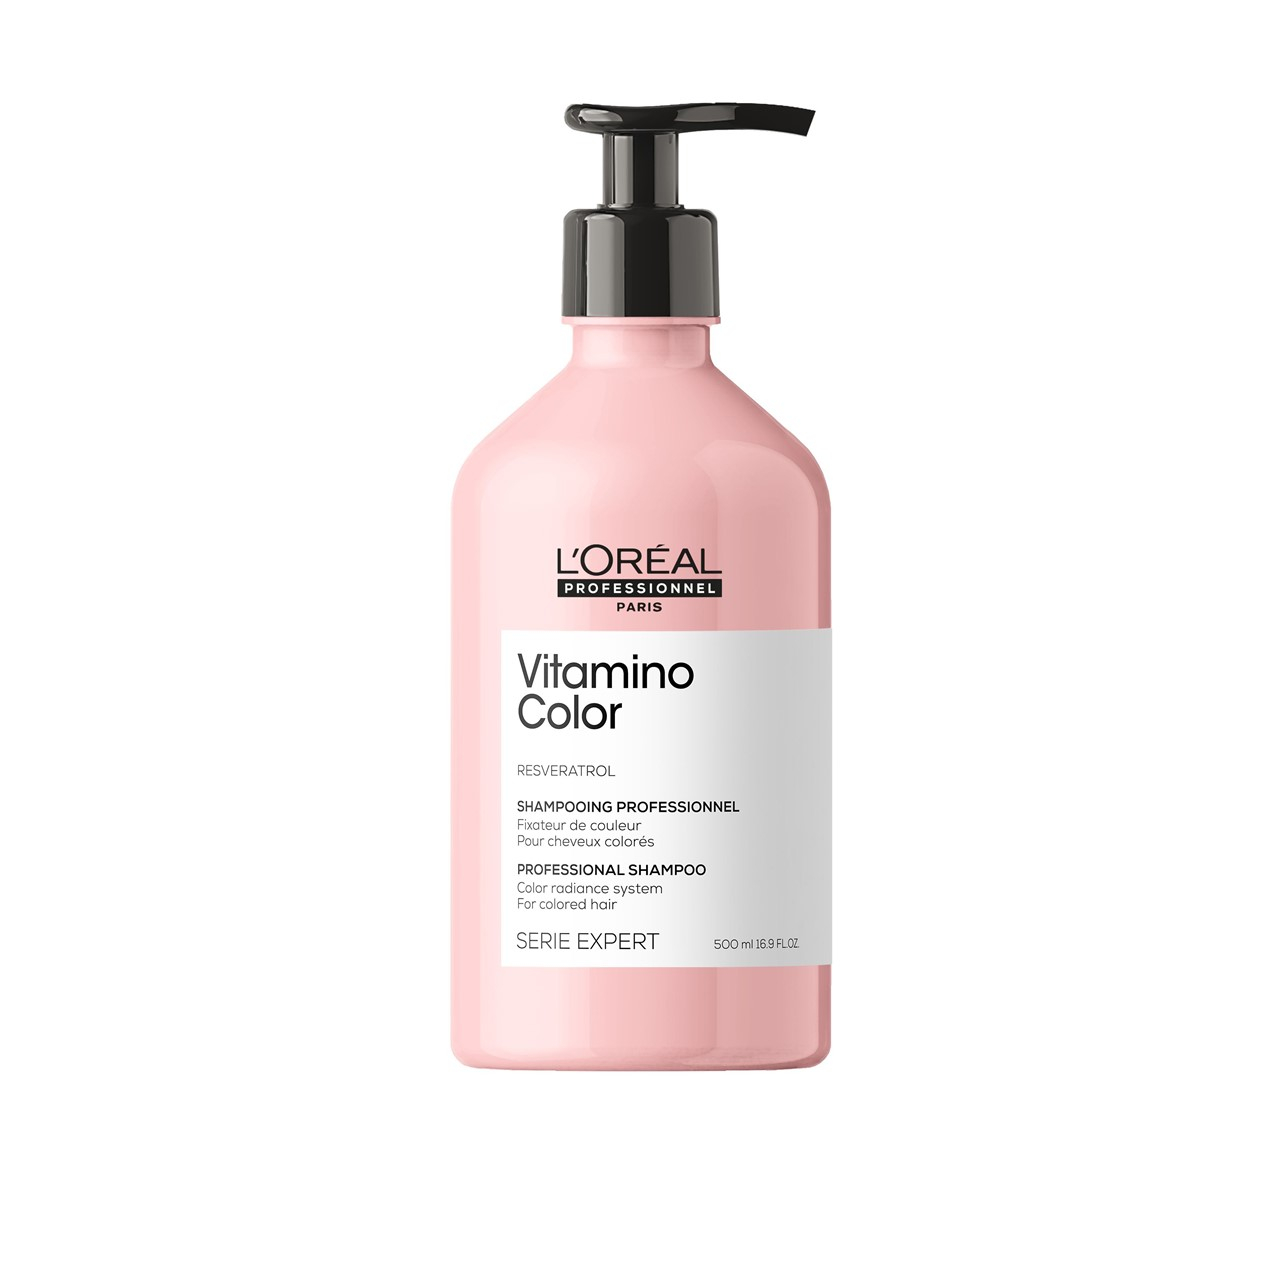 L'Oréal Professionnel Série Expert Vitamino Color Shampoo 500ml (16.91fl oz)